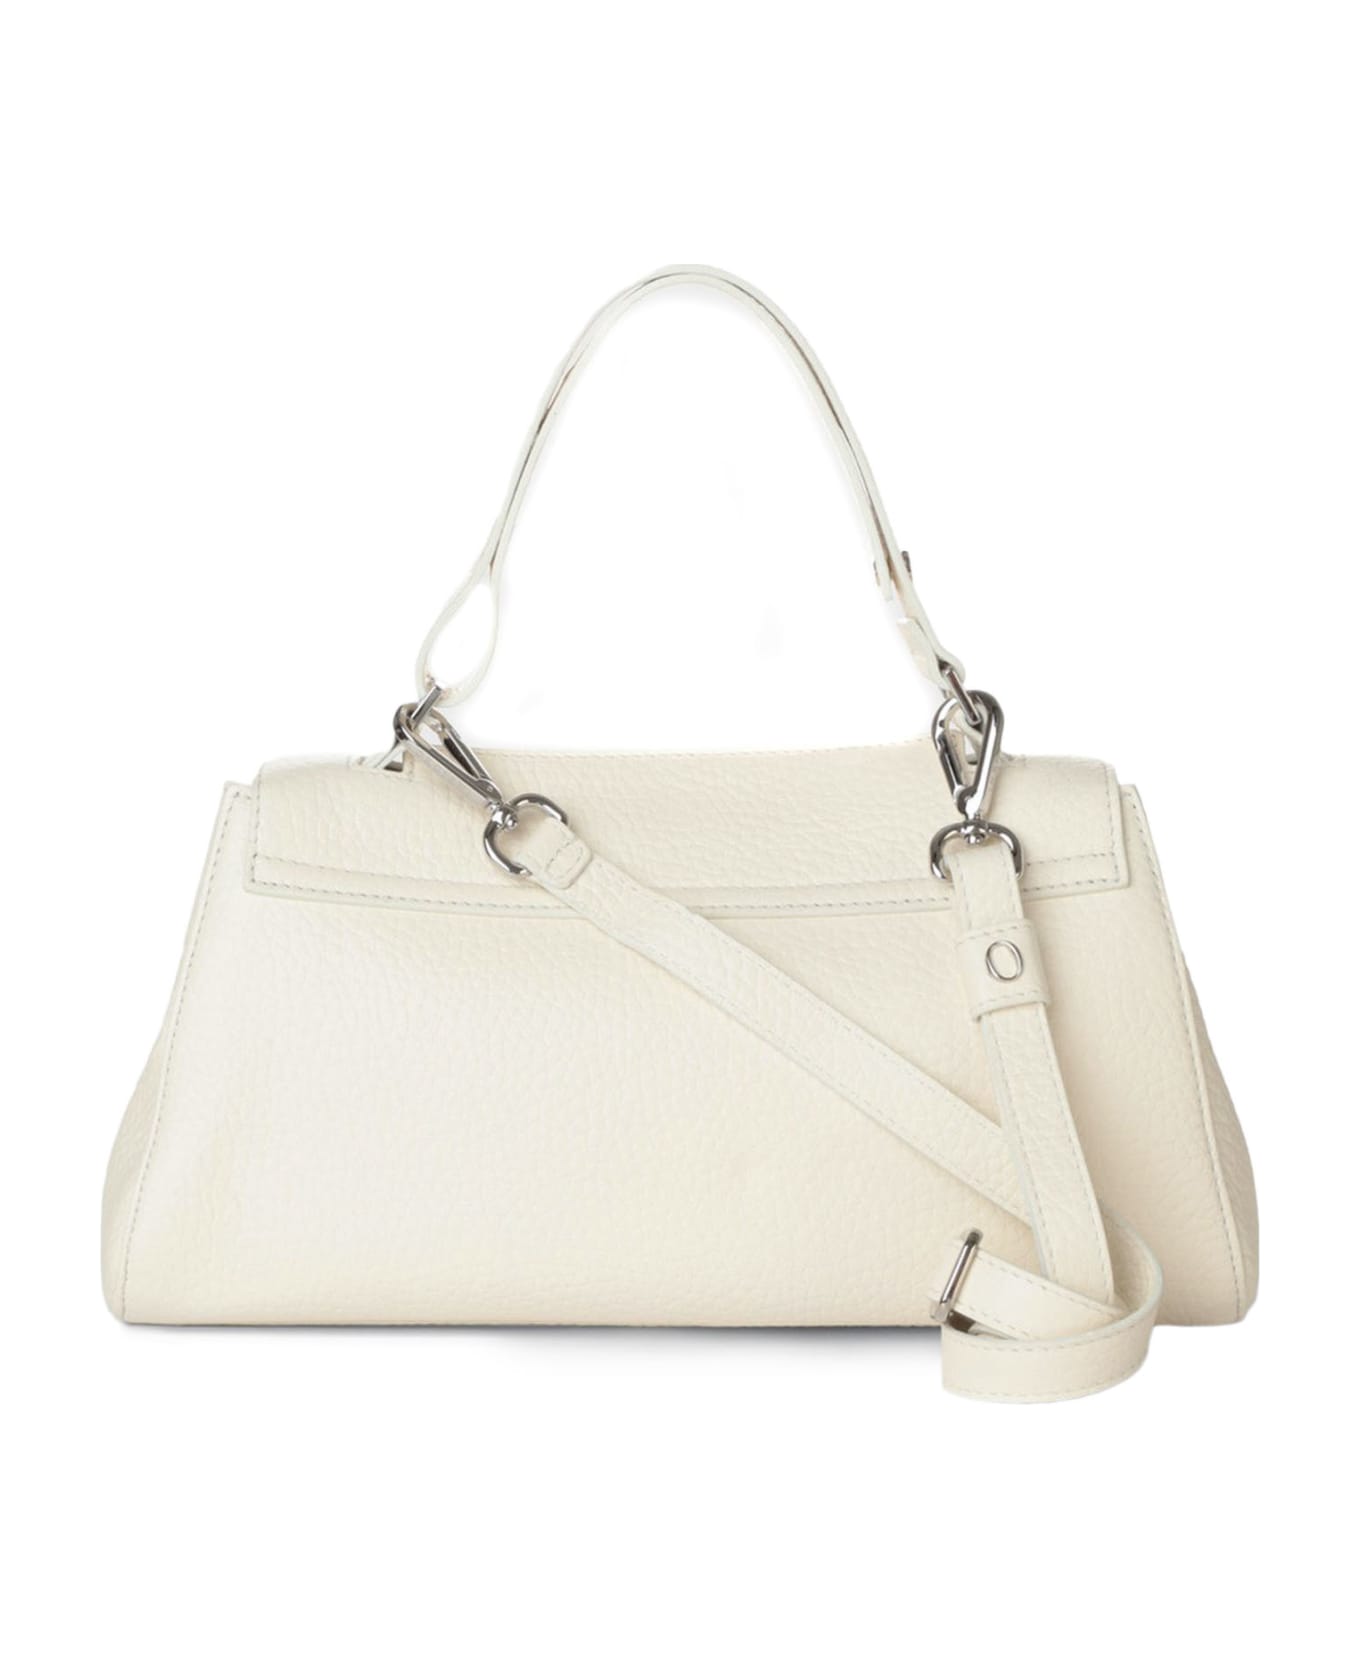 Orciani Sveva Longuette Soft Leather Handbag - White